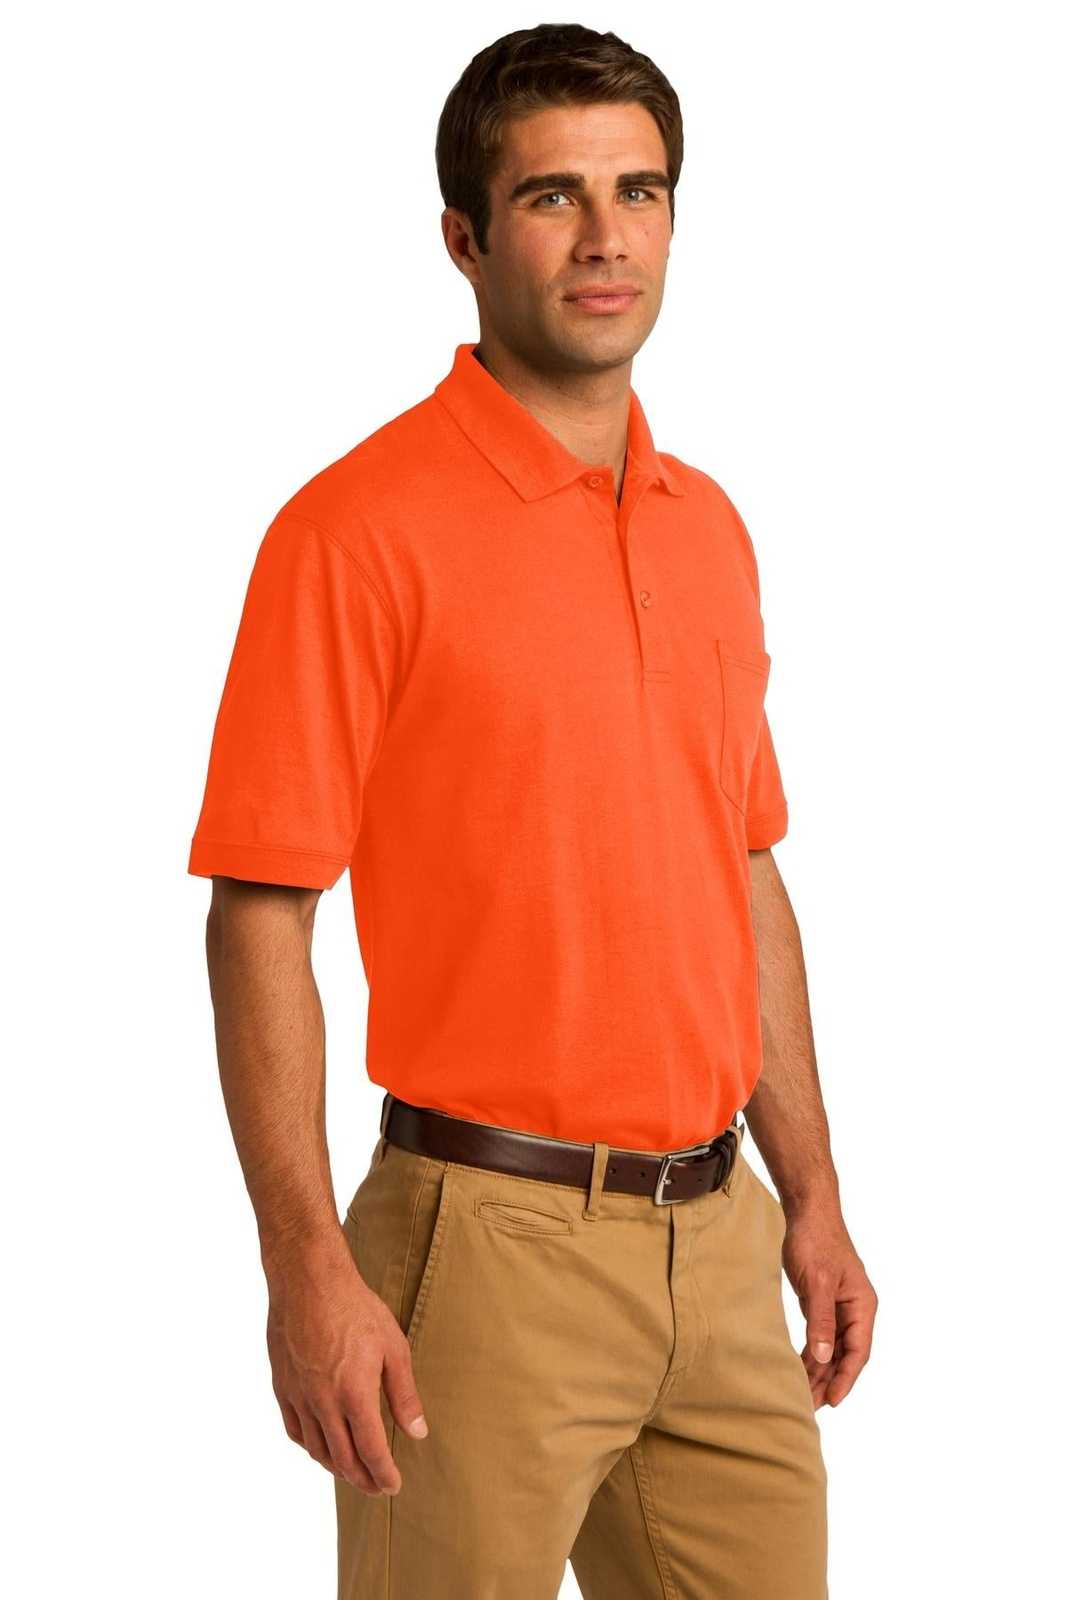 Port &amp; Company KP55P Core Blend Jersey Knit Pocket Polo - Safety Orange - HIT a Double - 4